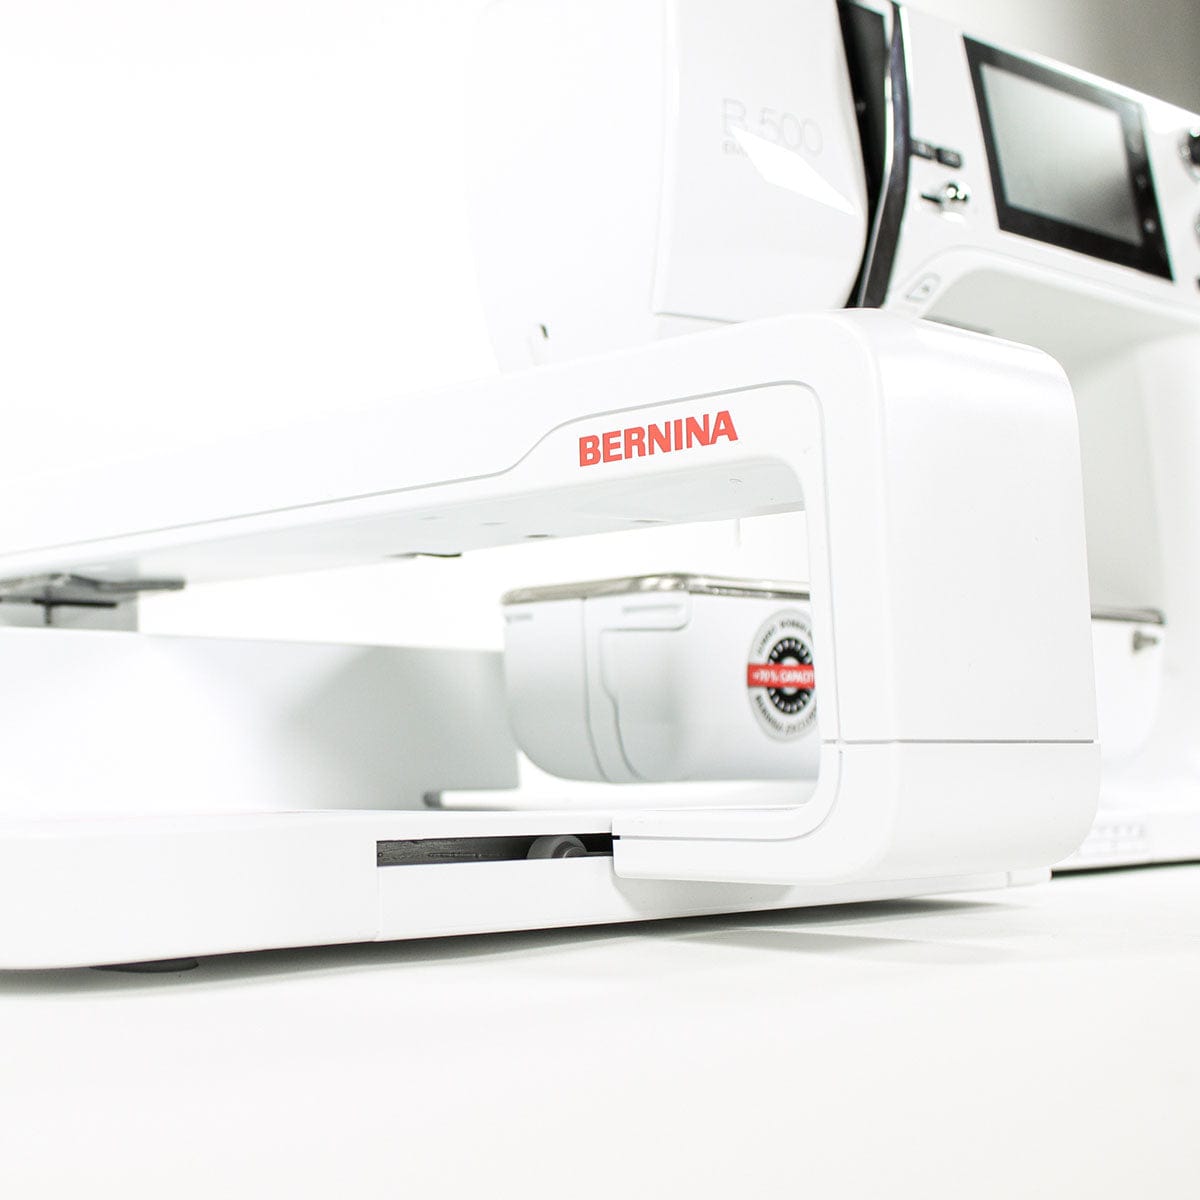 Bernina 500E Embroidery Machine